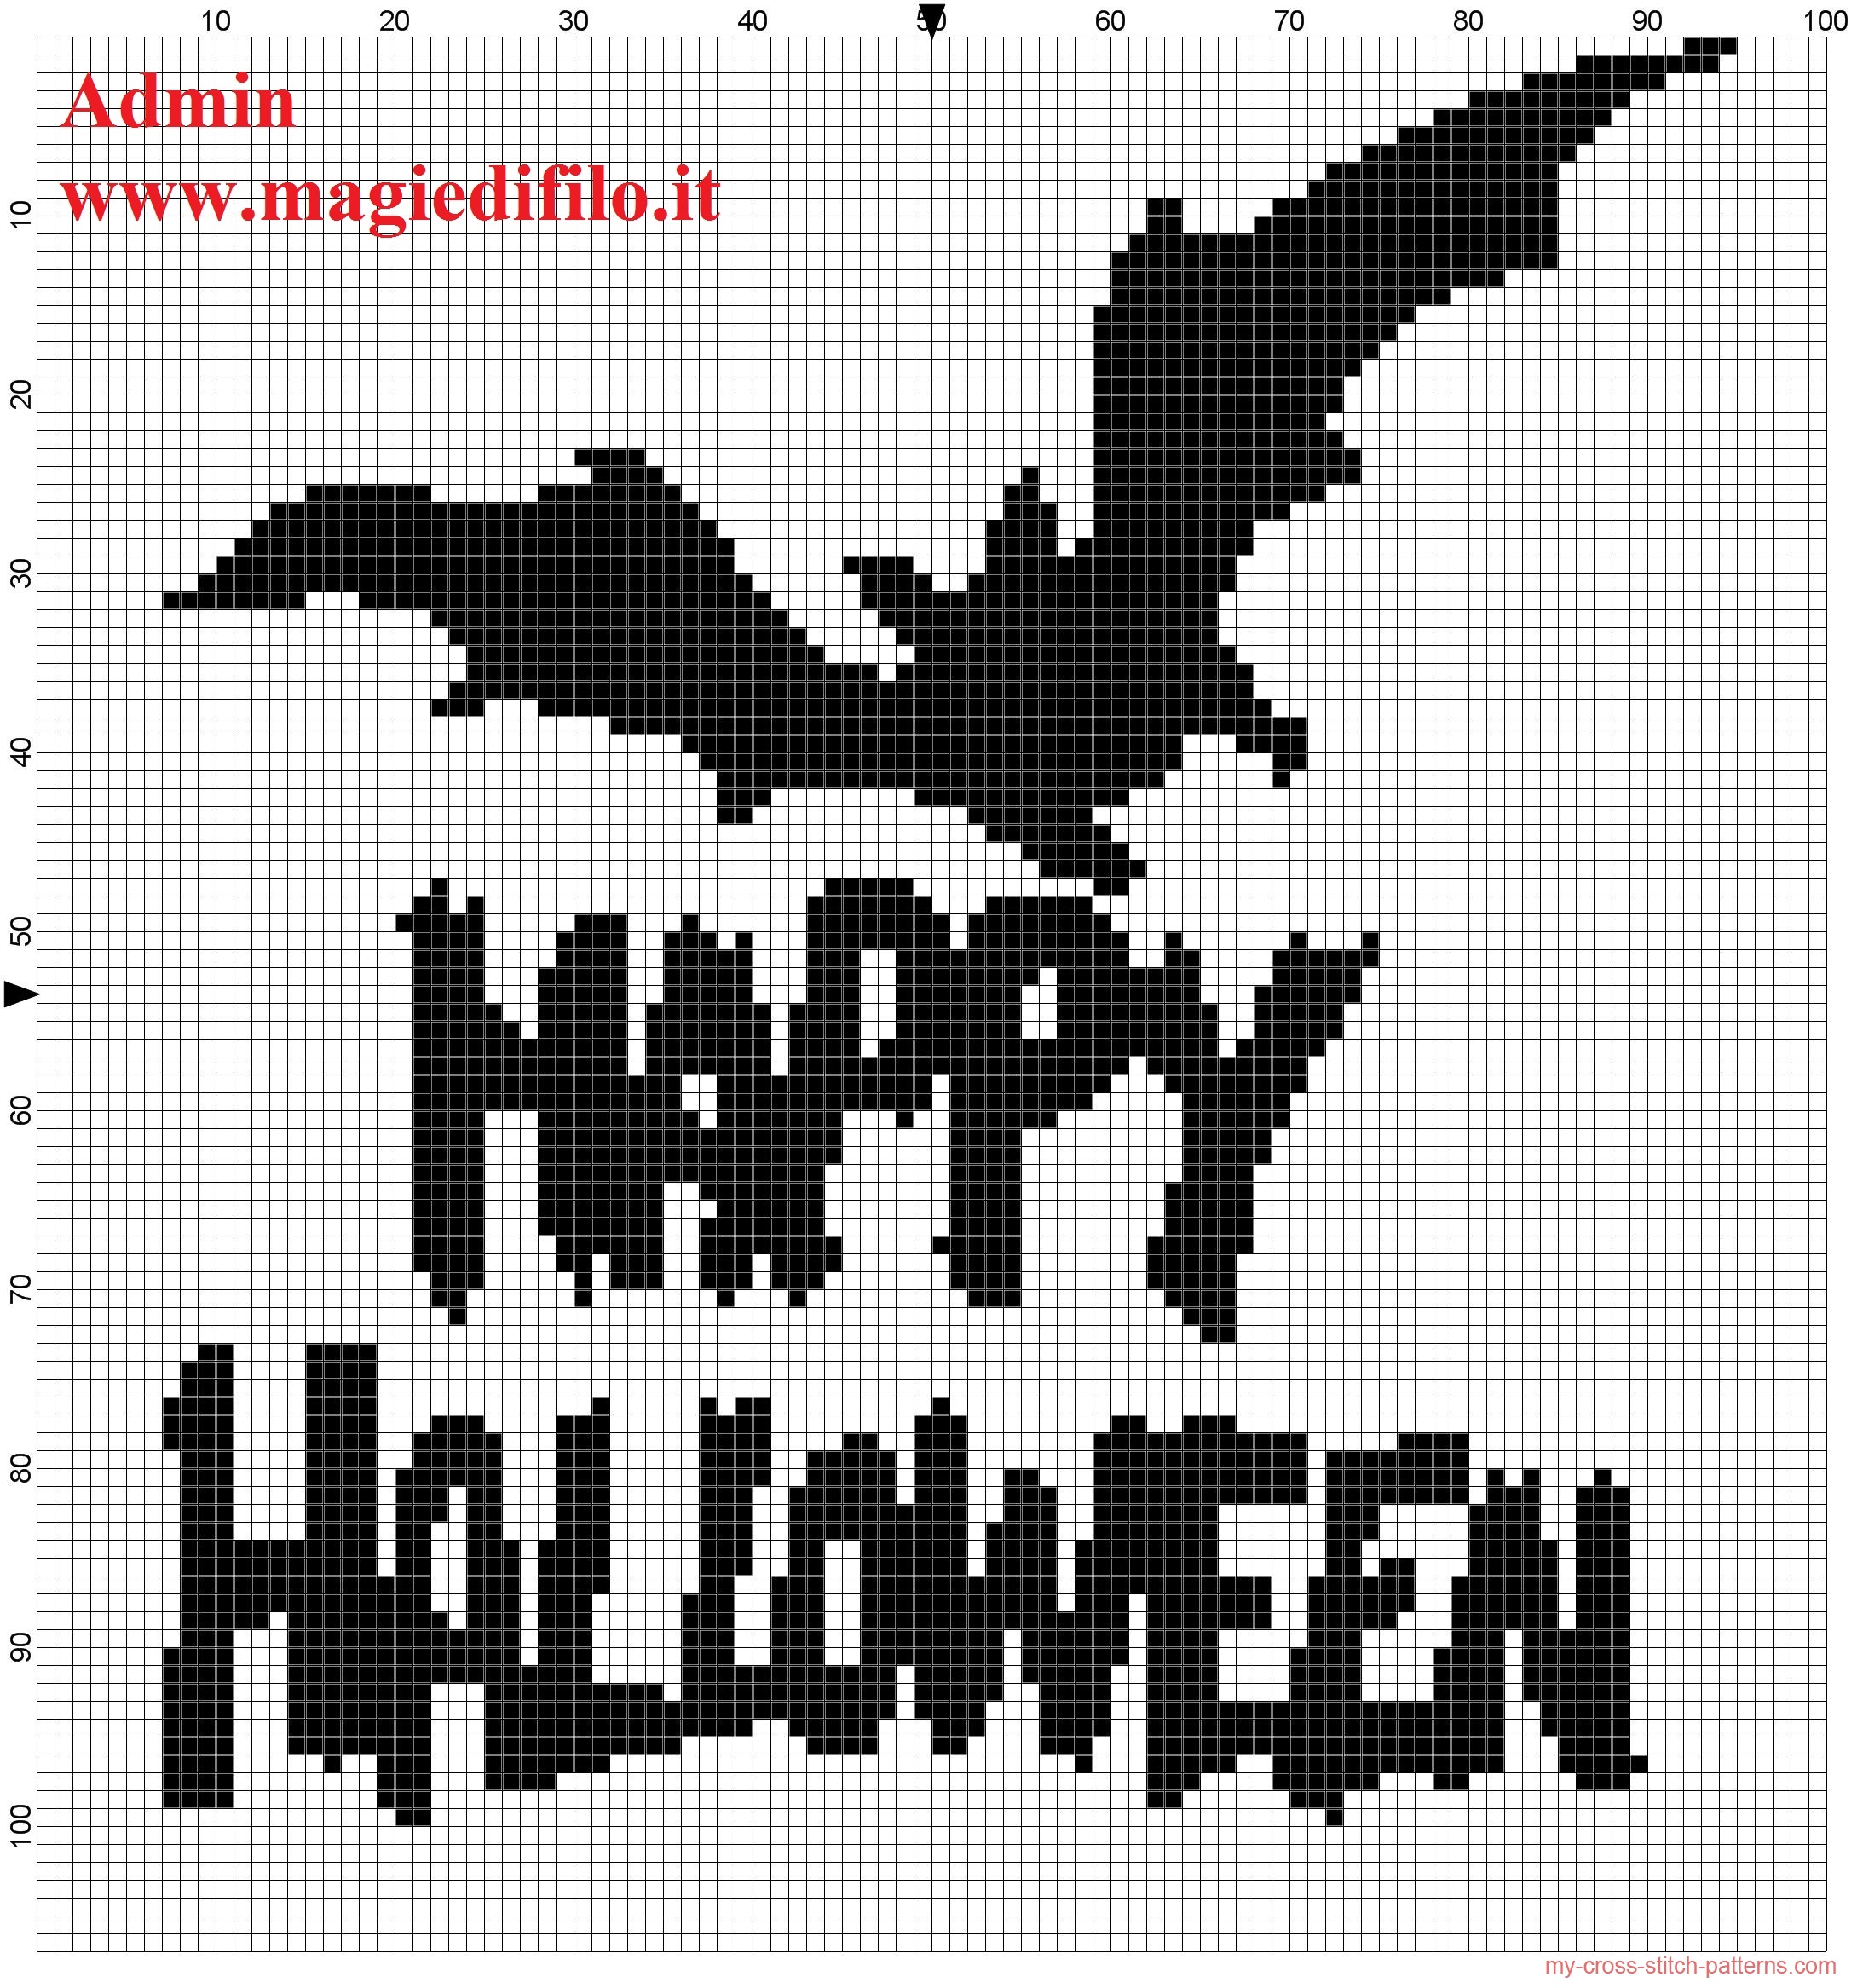 text_happy_halloween_with_a_black_bat